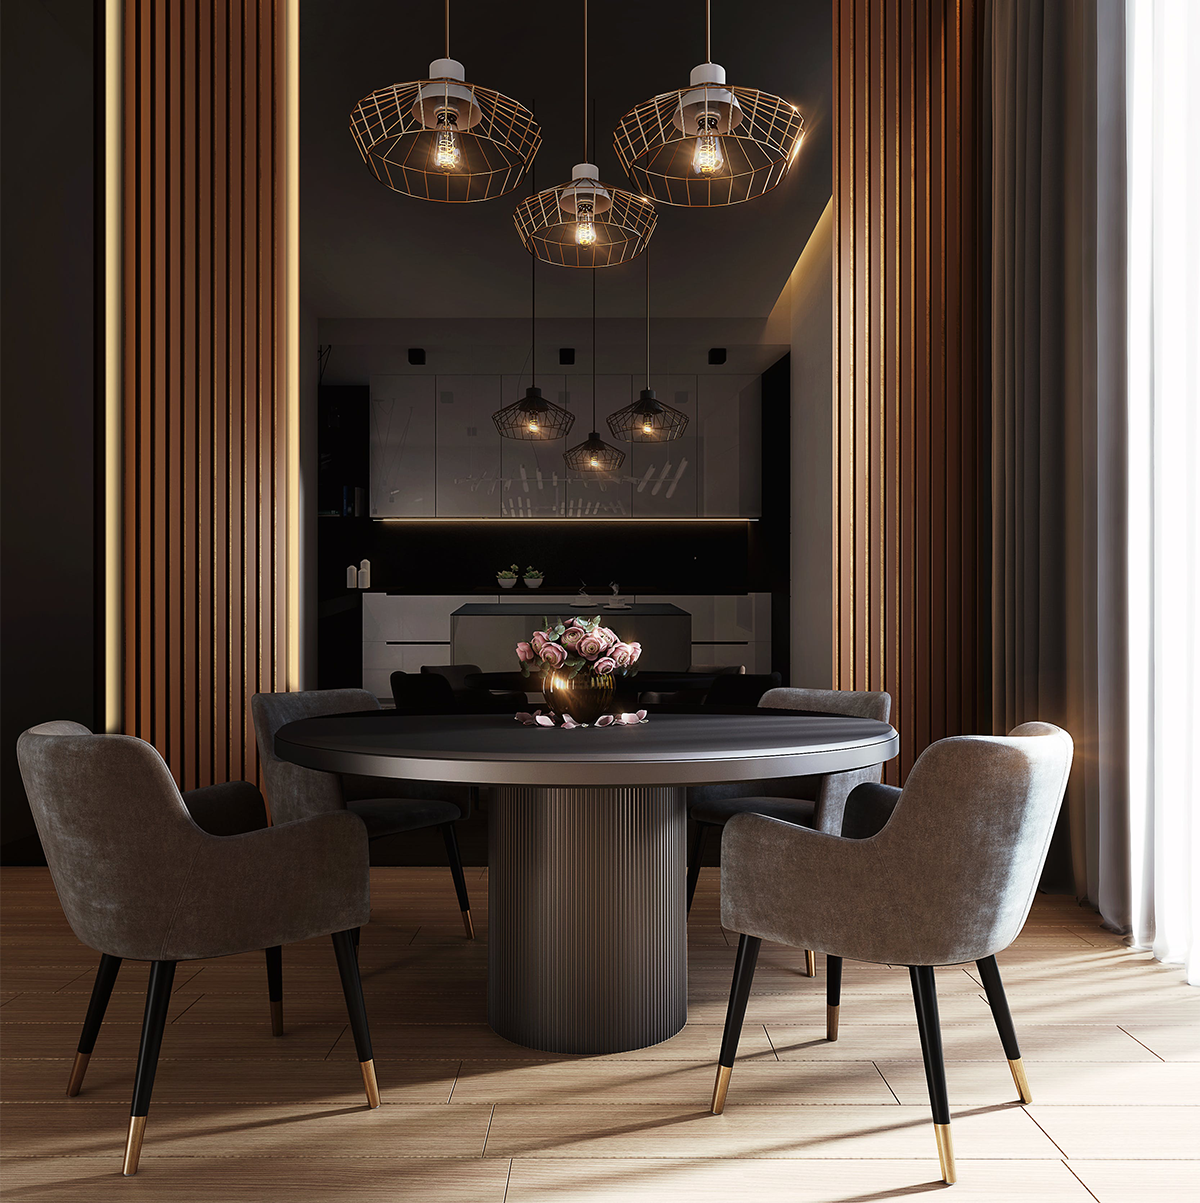 Luxury interior design in a luxury Hampton home in New York